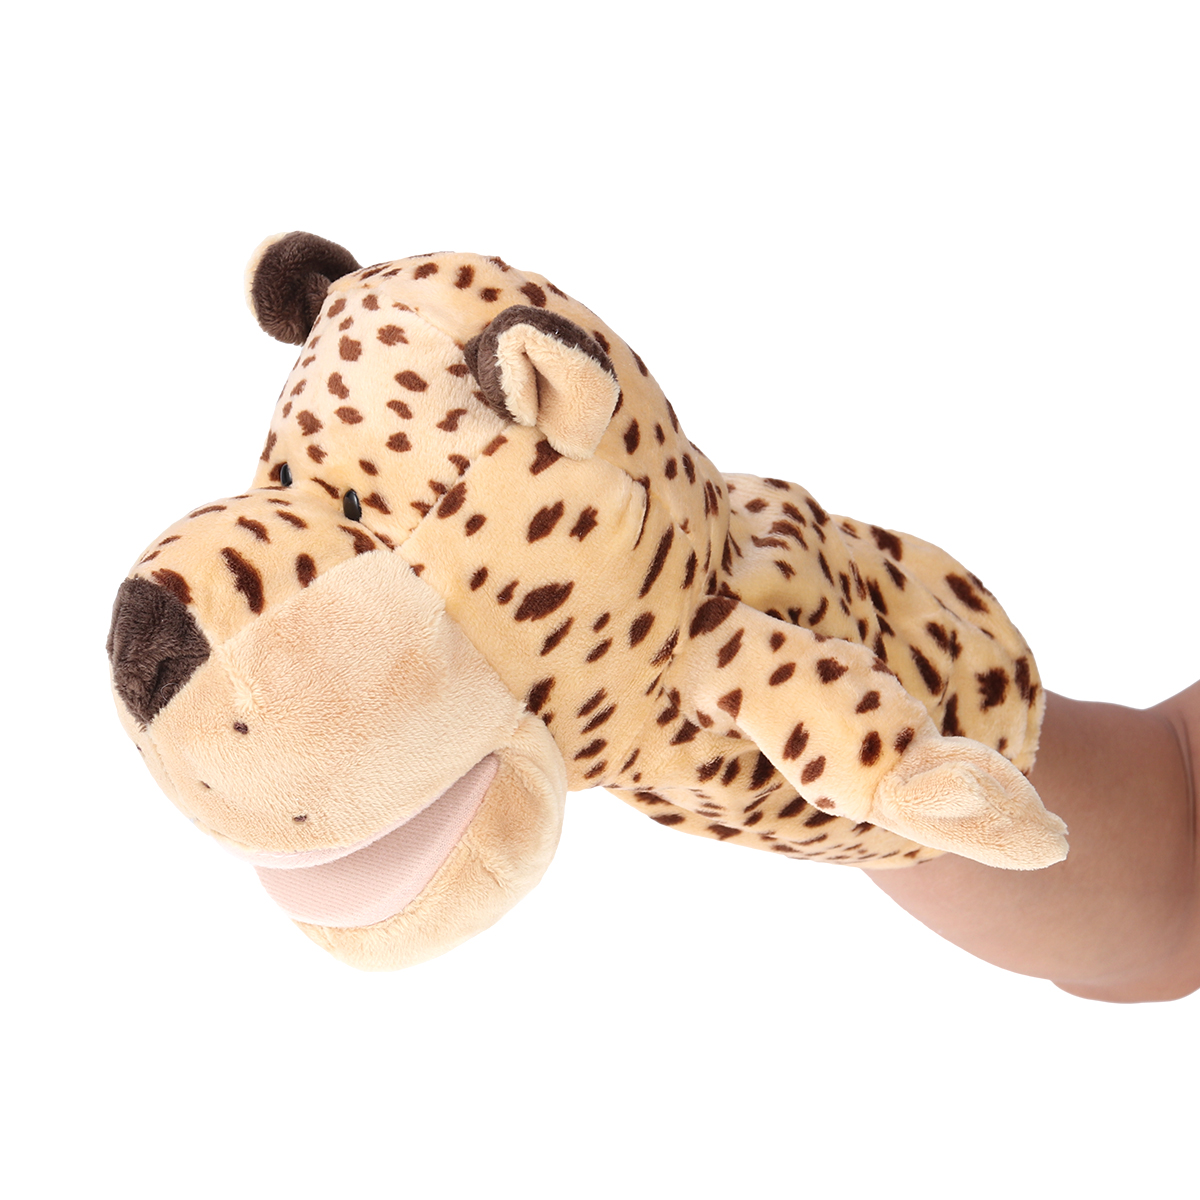 2pcs Adorable Plush Hand Puppet Leopard Zoo Friends Animals Educational Puppets Dolls Cartoon Leopard